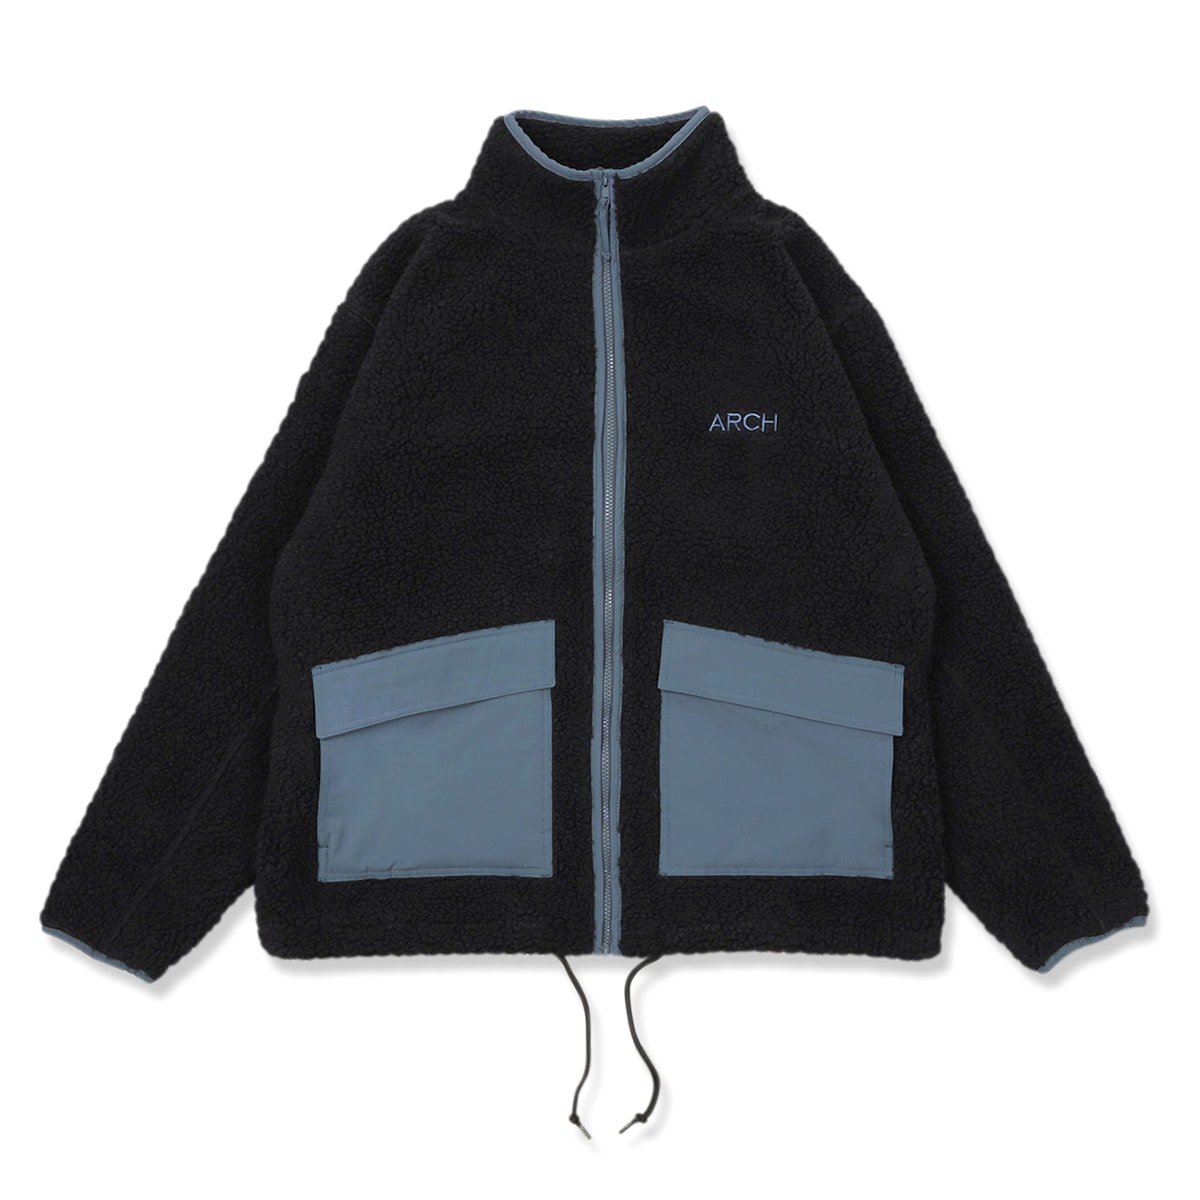 damask boa fleece jacket【black】 - Arch ☆ アーチ [バスケットボール＆ライフスタイルウェア  Basketball&Lifestyle wear]